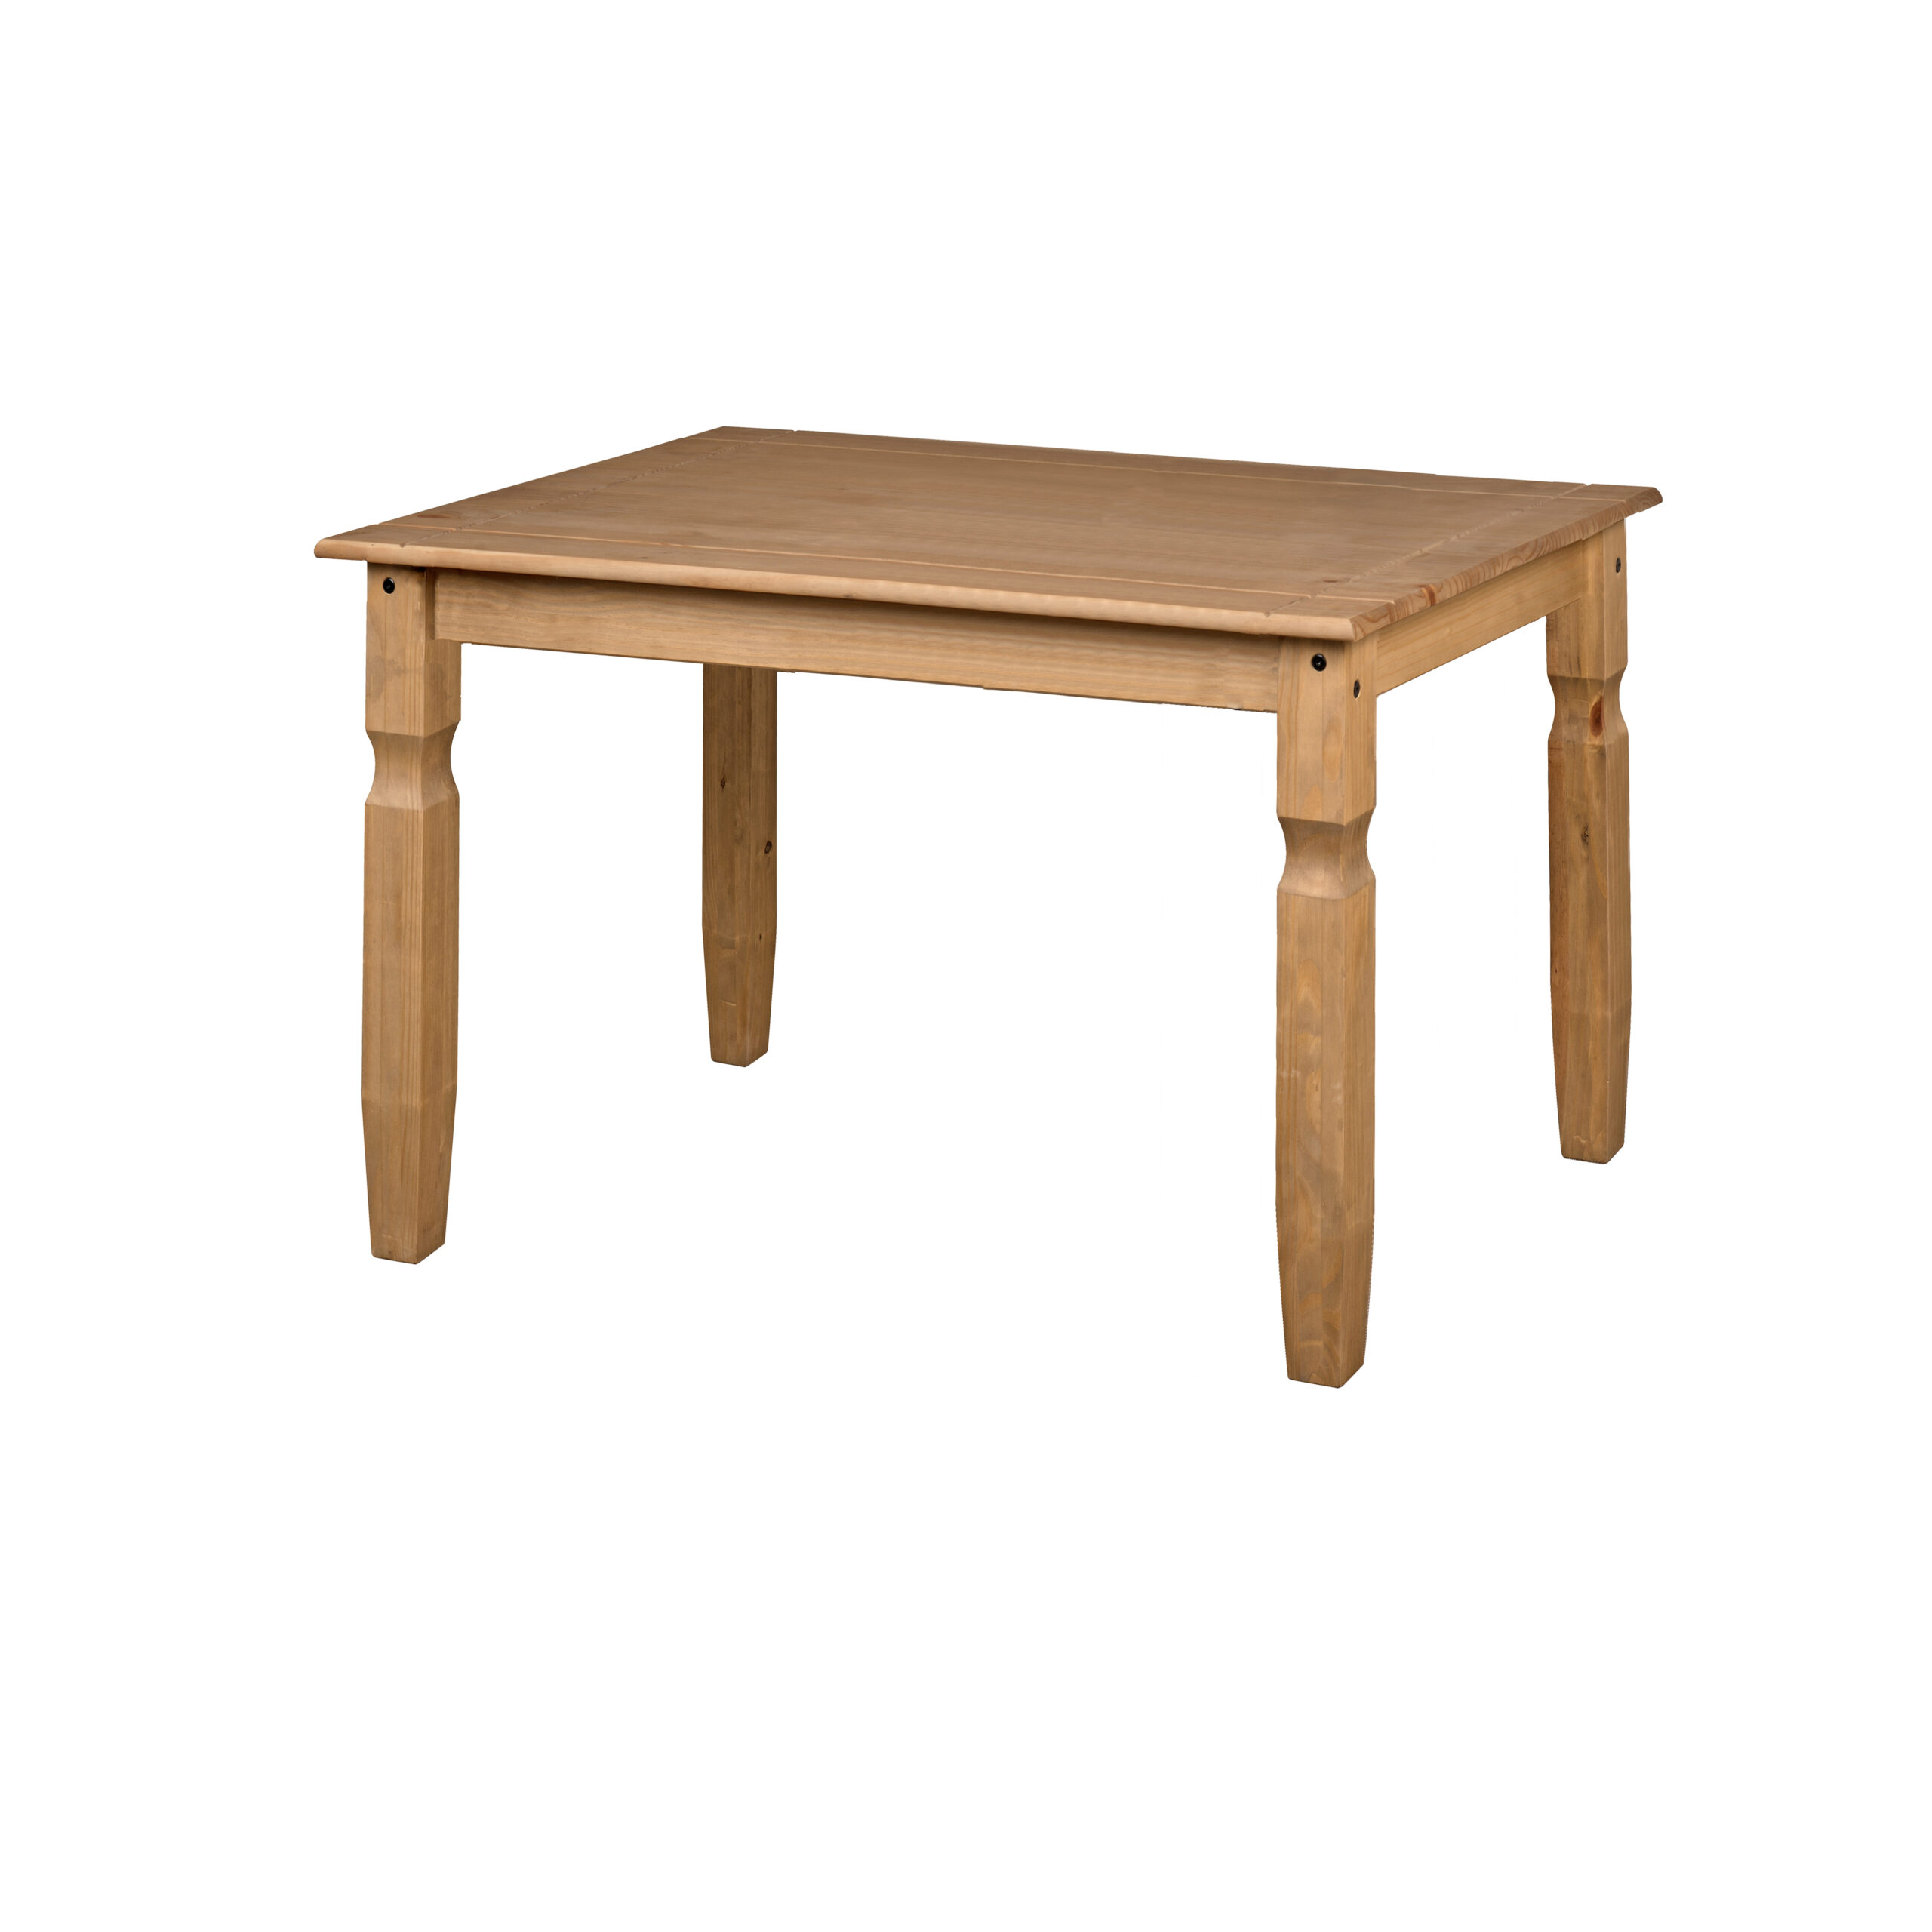 Cortan small rectangular dining table